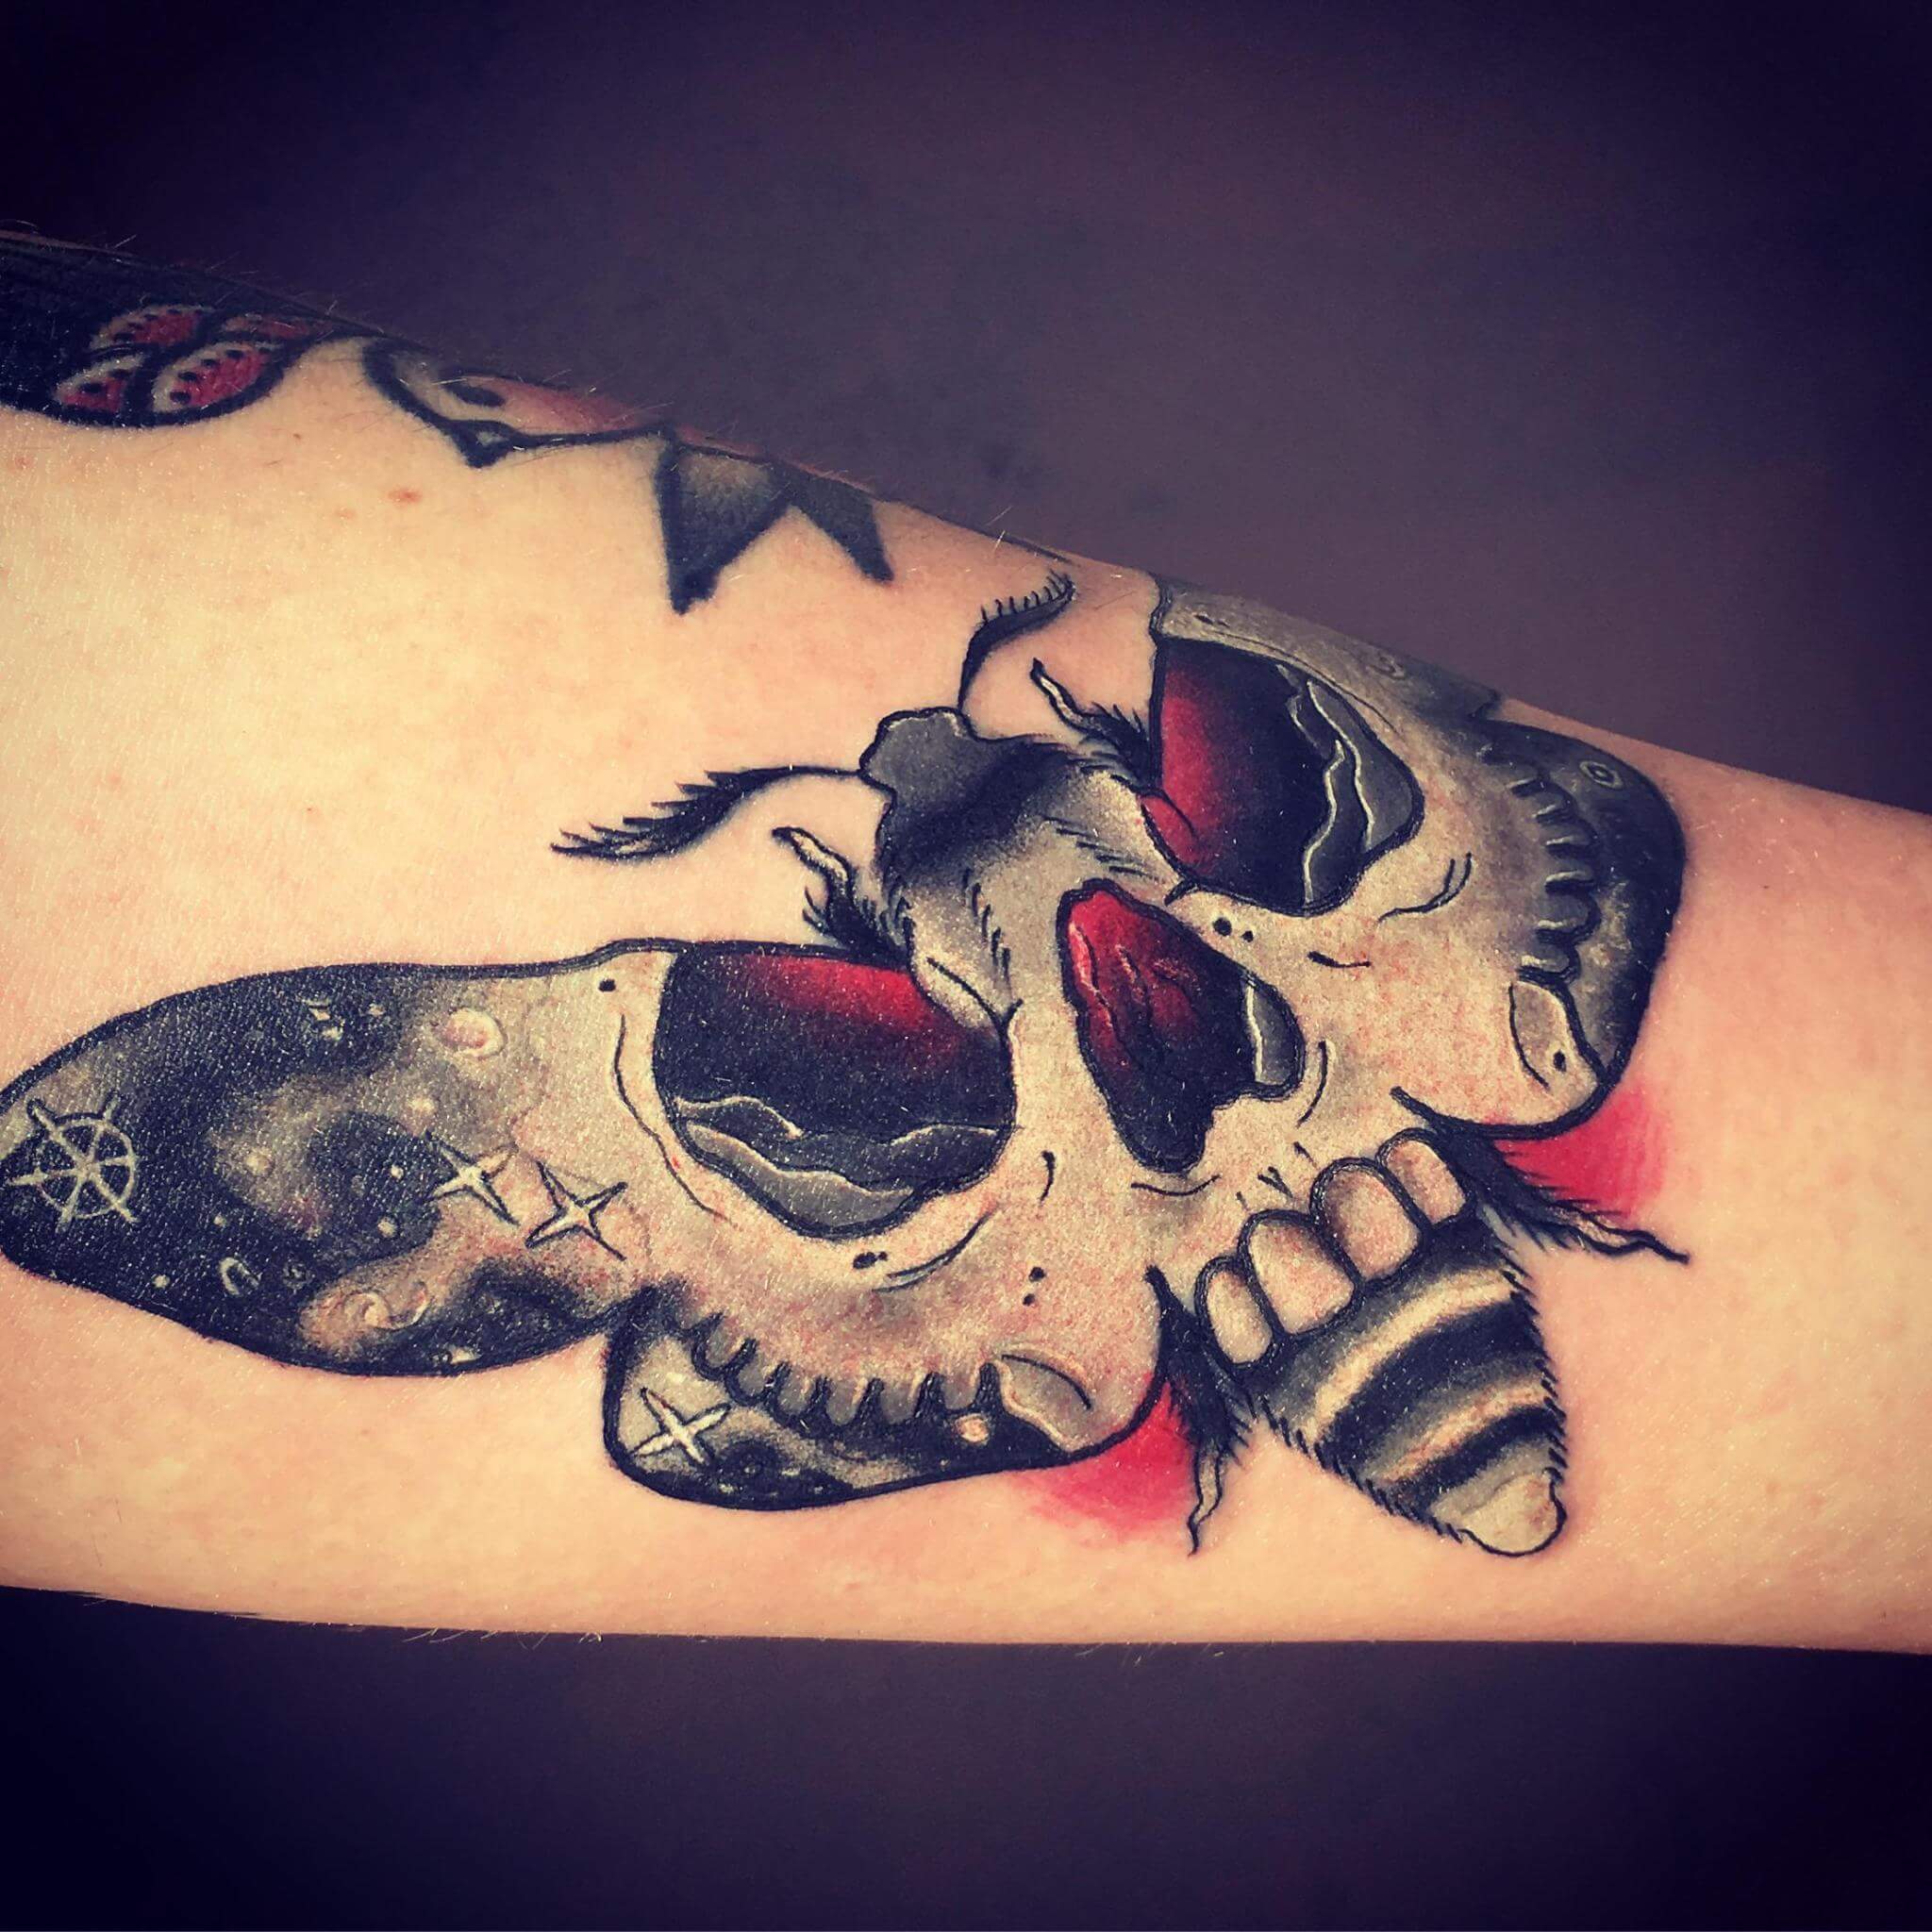 Tattoo Motte mit Totenkopf als Muster